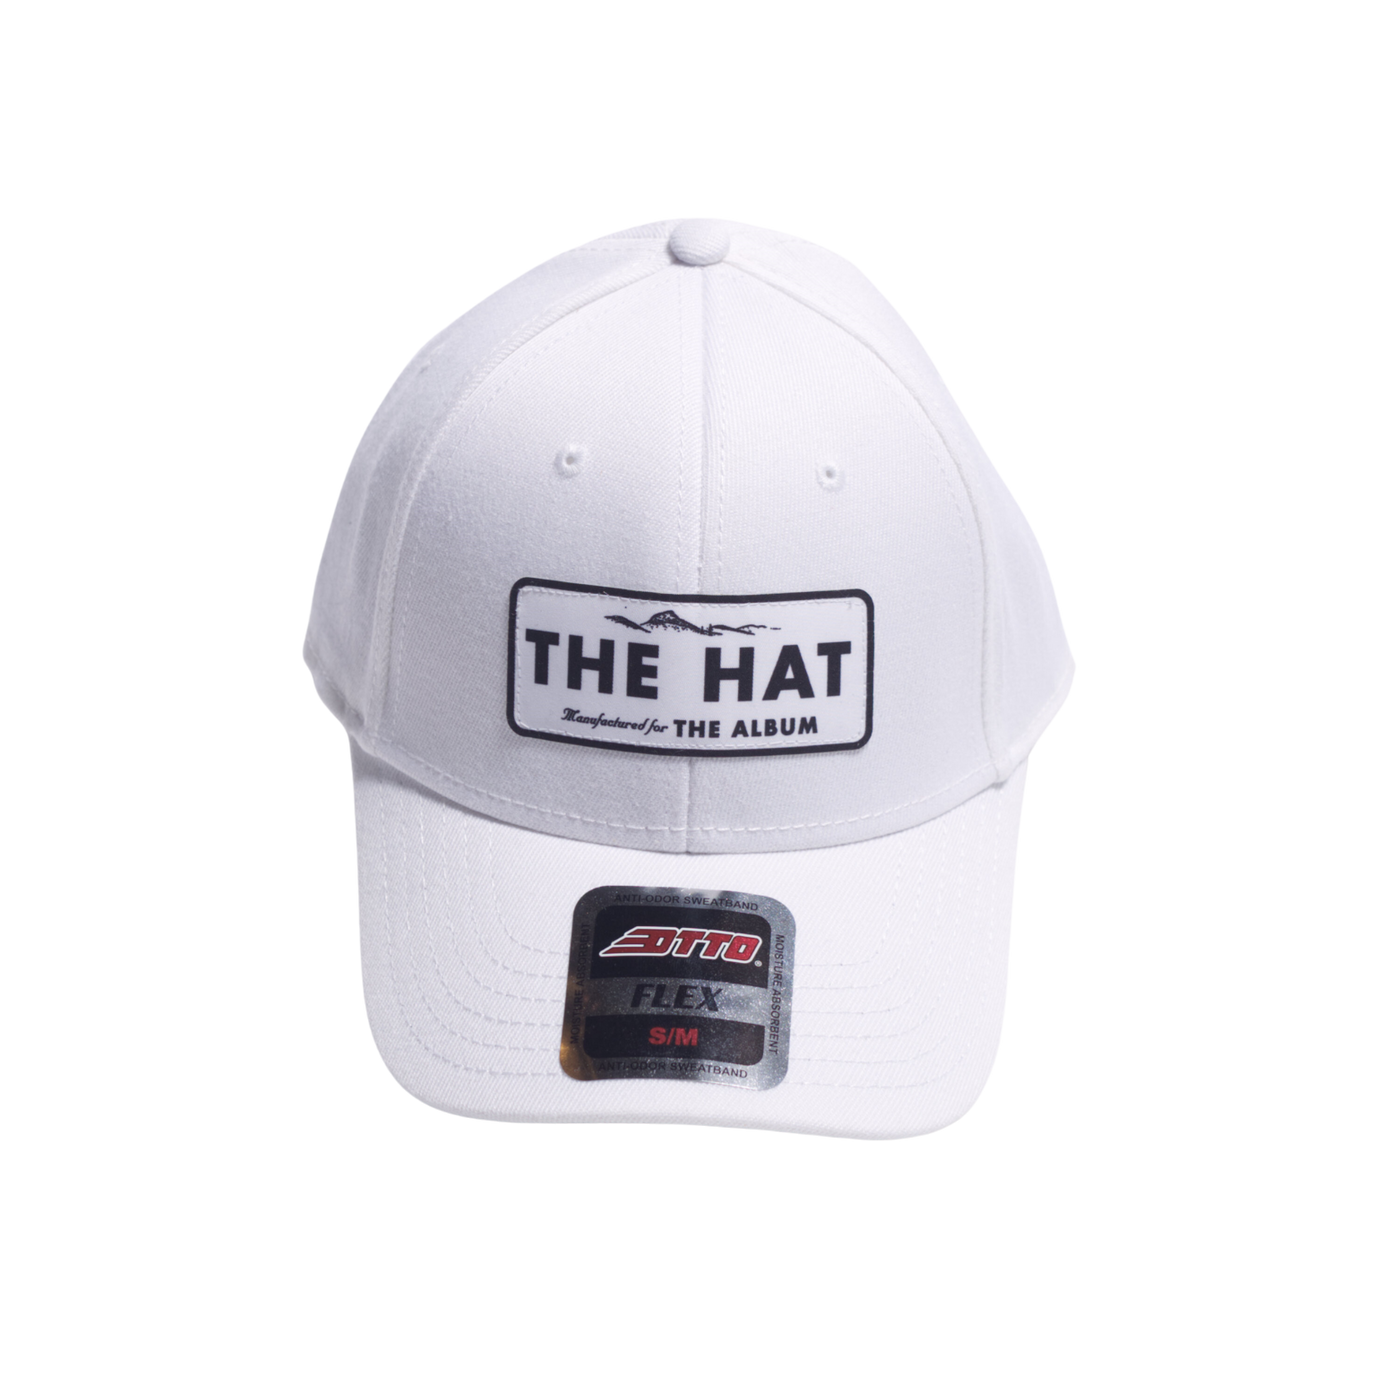 The Hat - White - Flex Fit